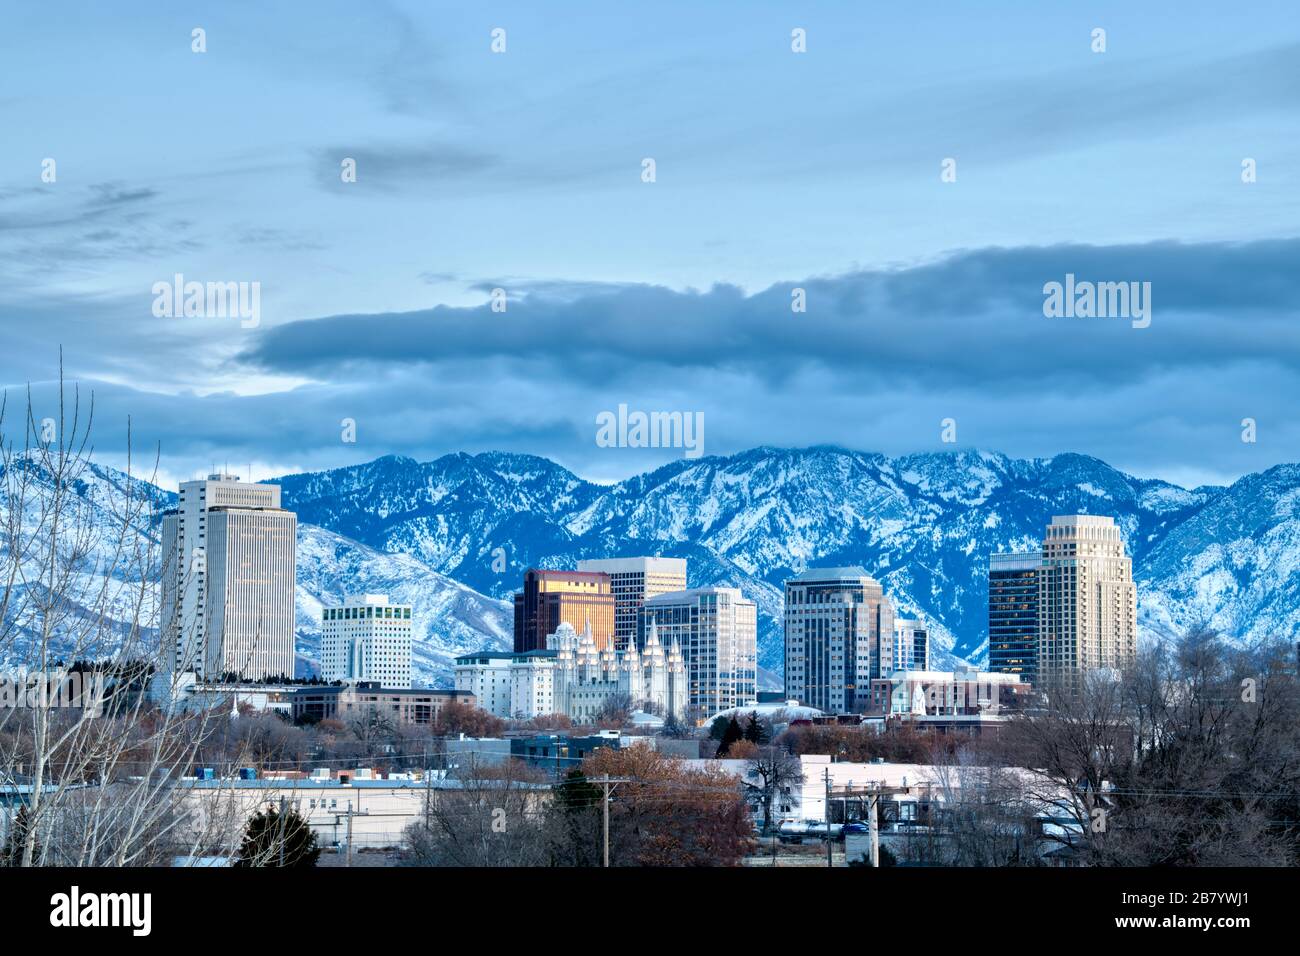 Salt Lake City Winter Skyline taken at Blue Hour Stock Photo